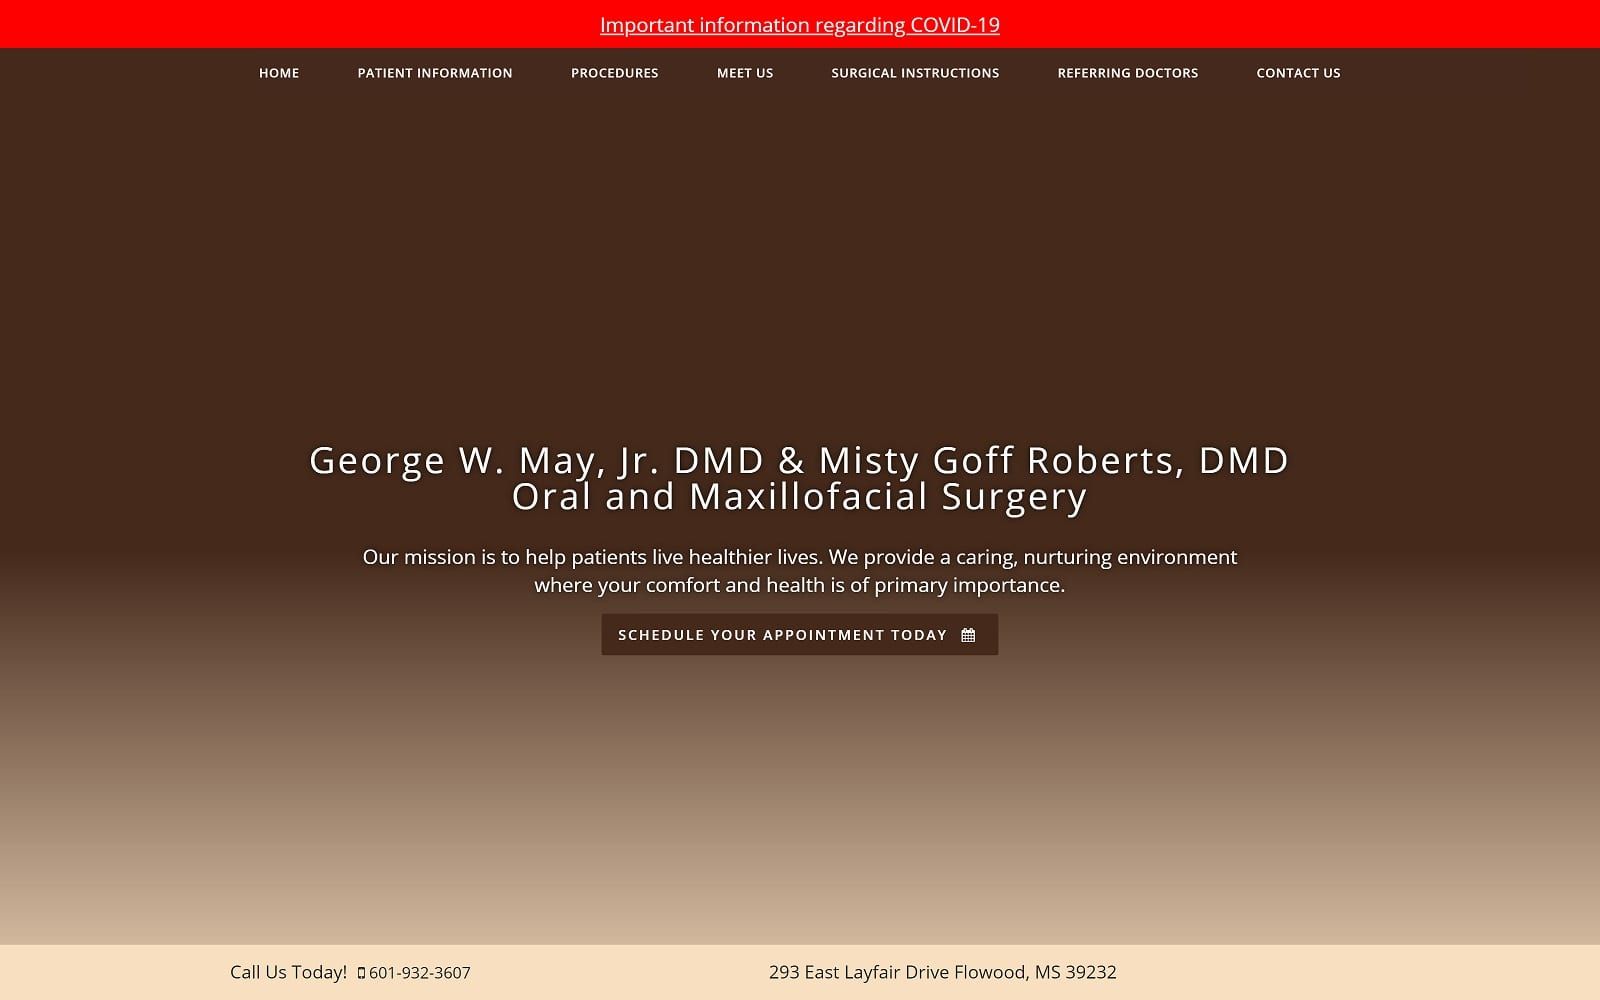 The Screenshot of Dr. George W. May, Jr. DMD georgemayoralsurgery.com Website